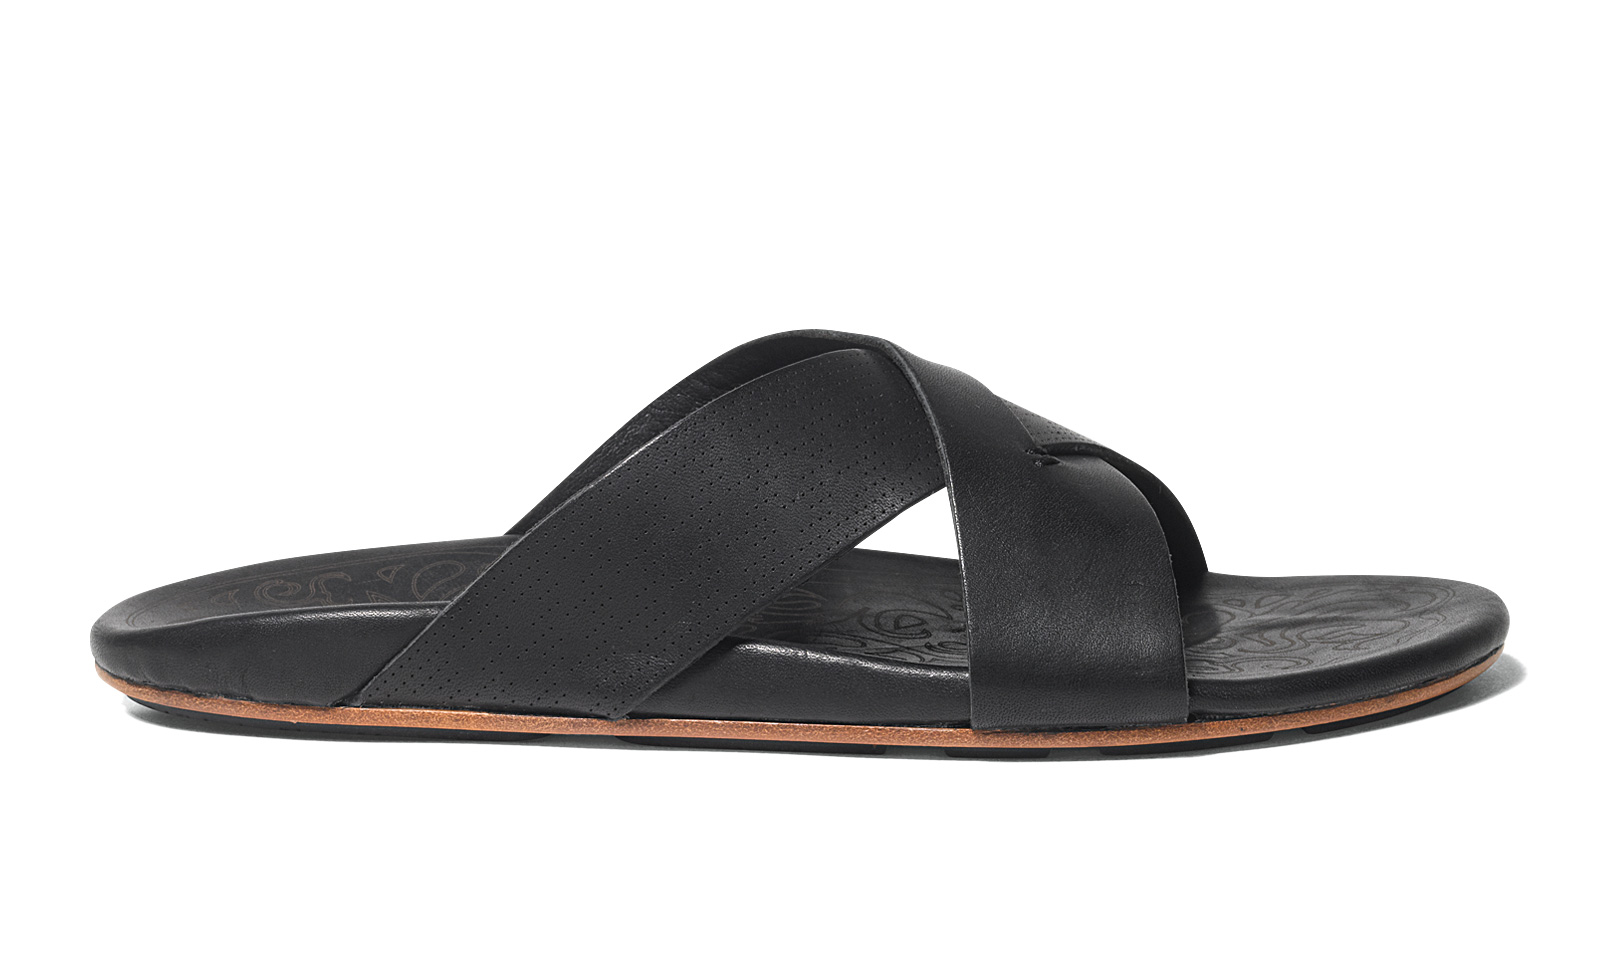 ... Men's Orthopedic Footwear Sandals OluKai Punono - Men's Leather Slides